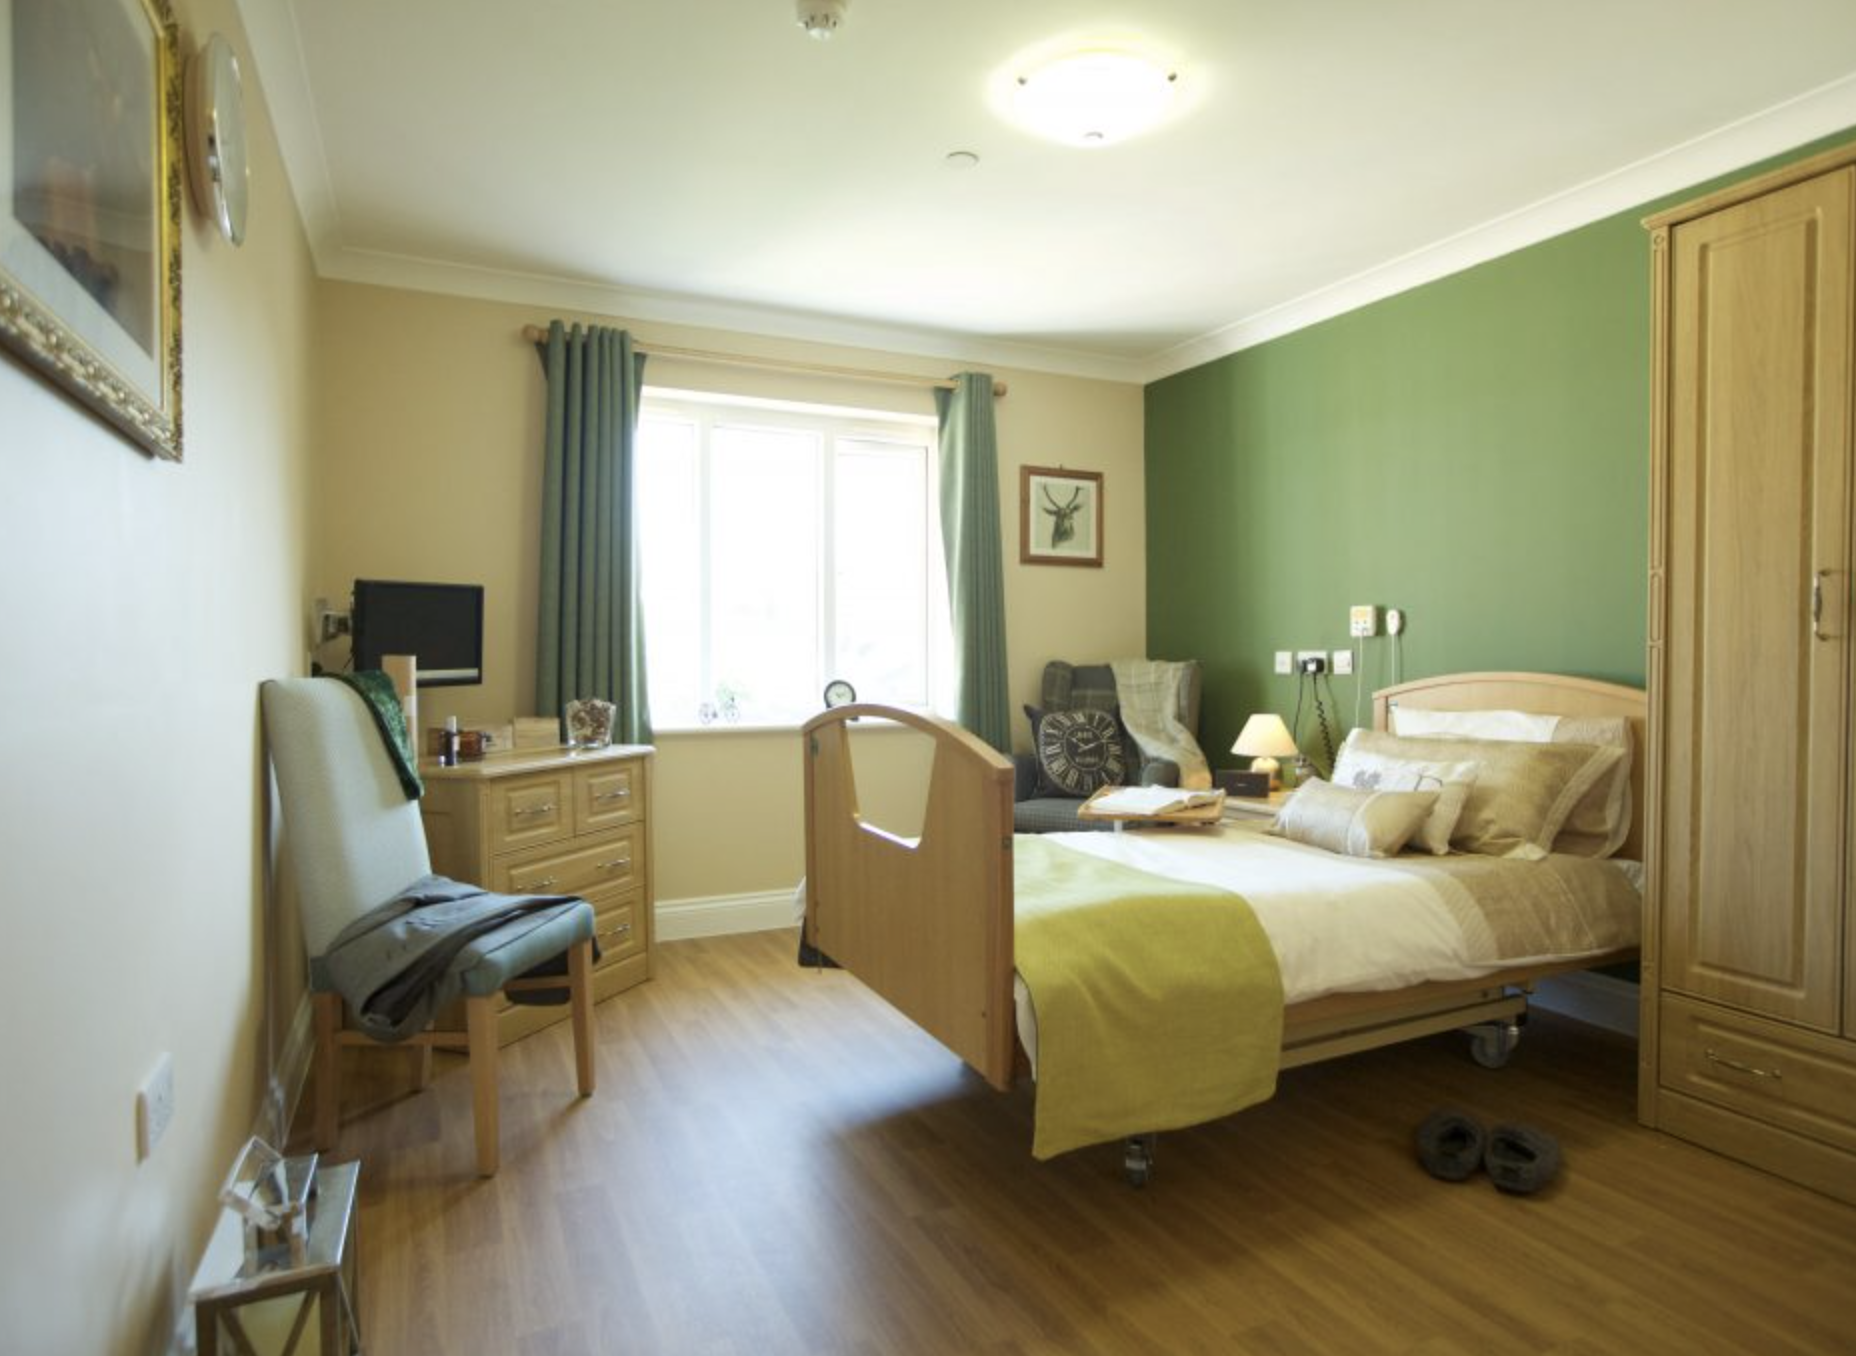 Bedroom of Carlton Court care home in Barnet, London